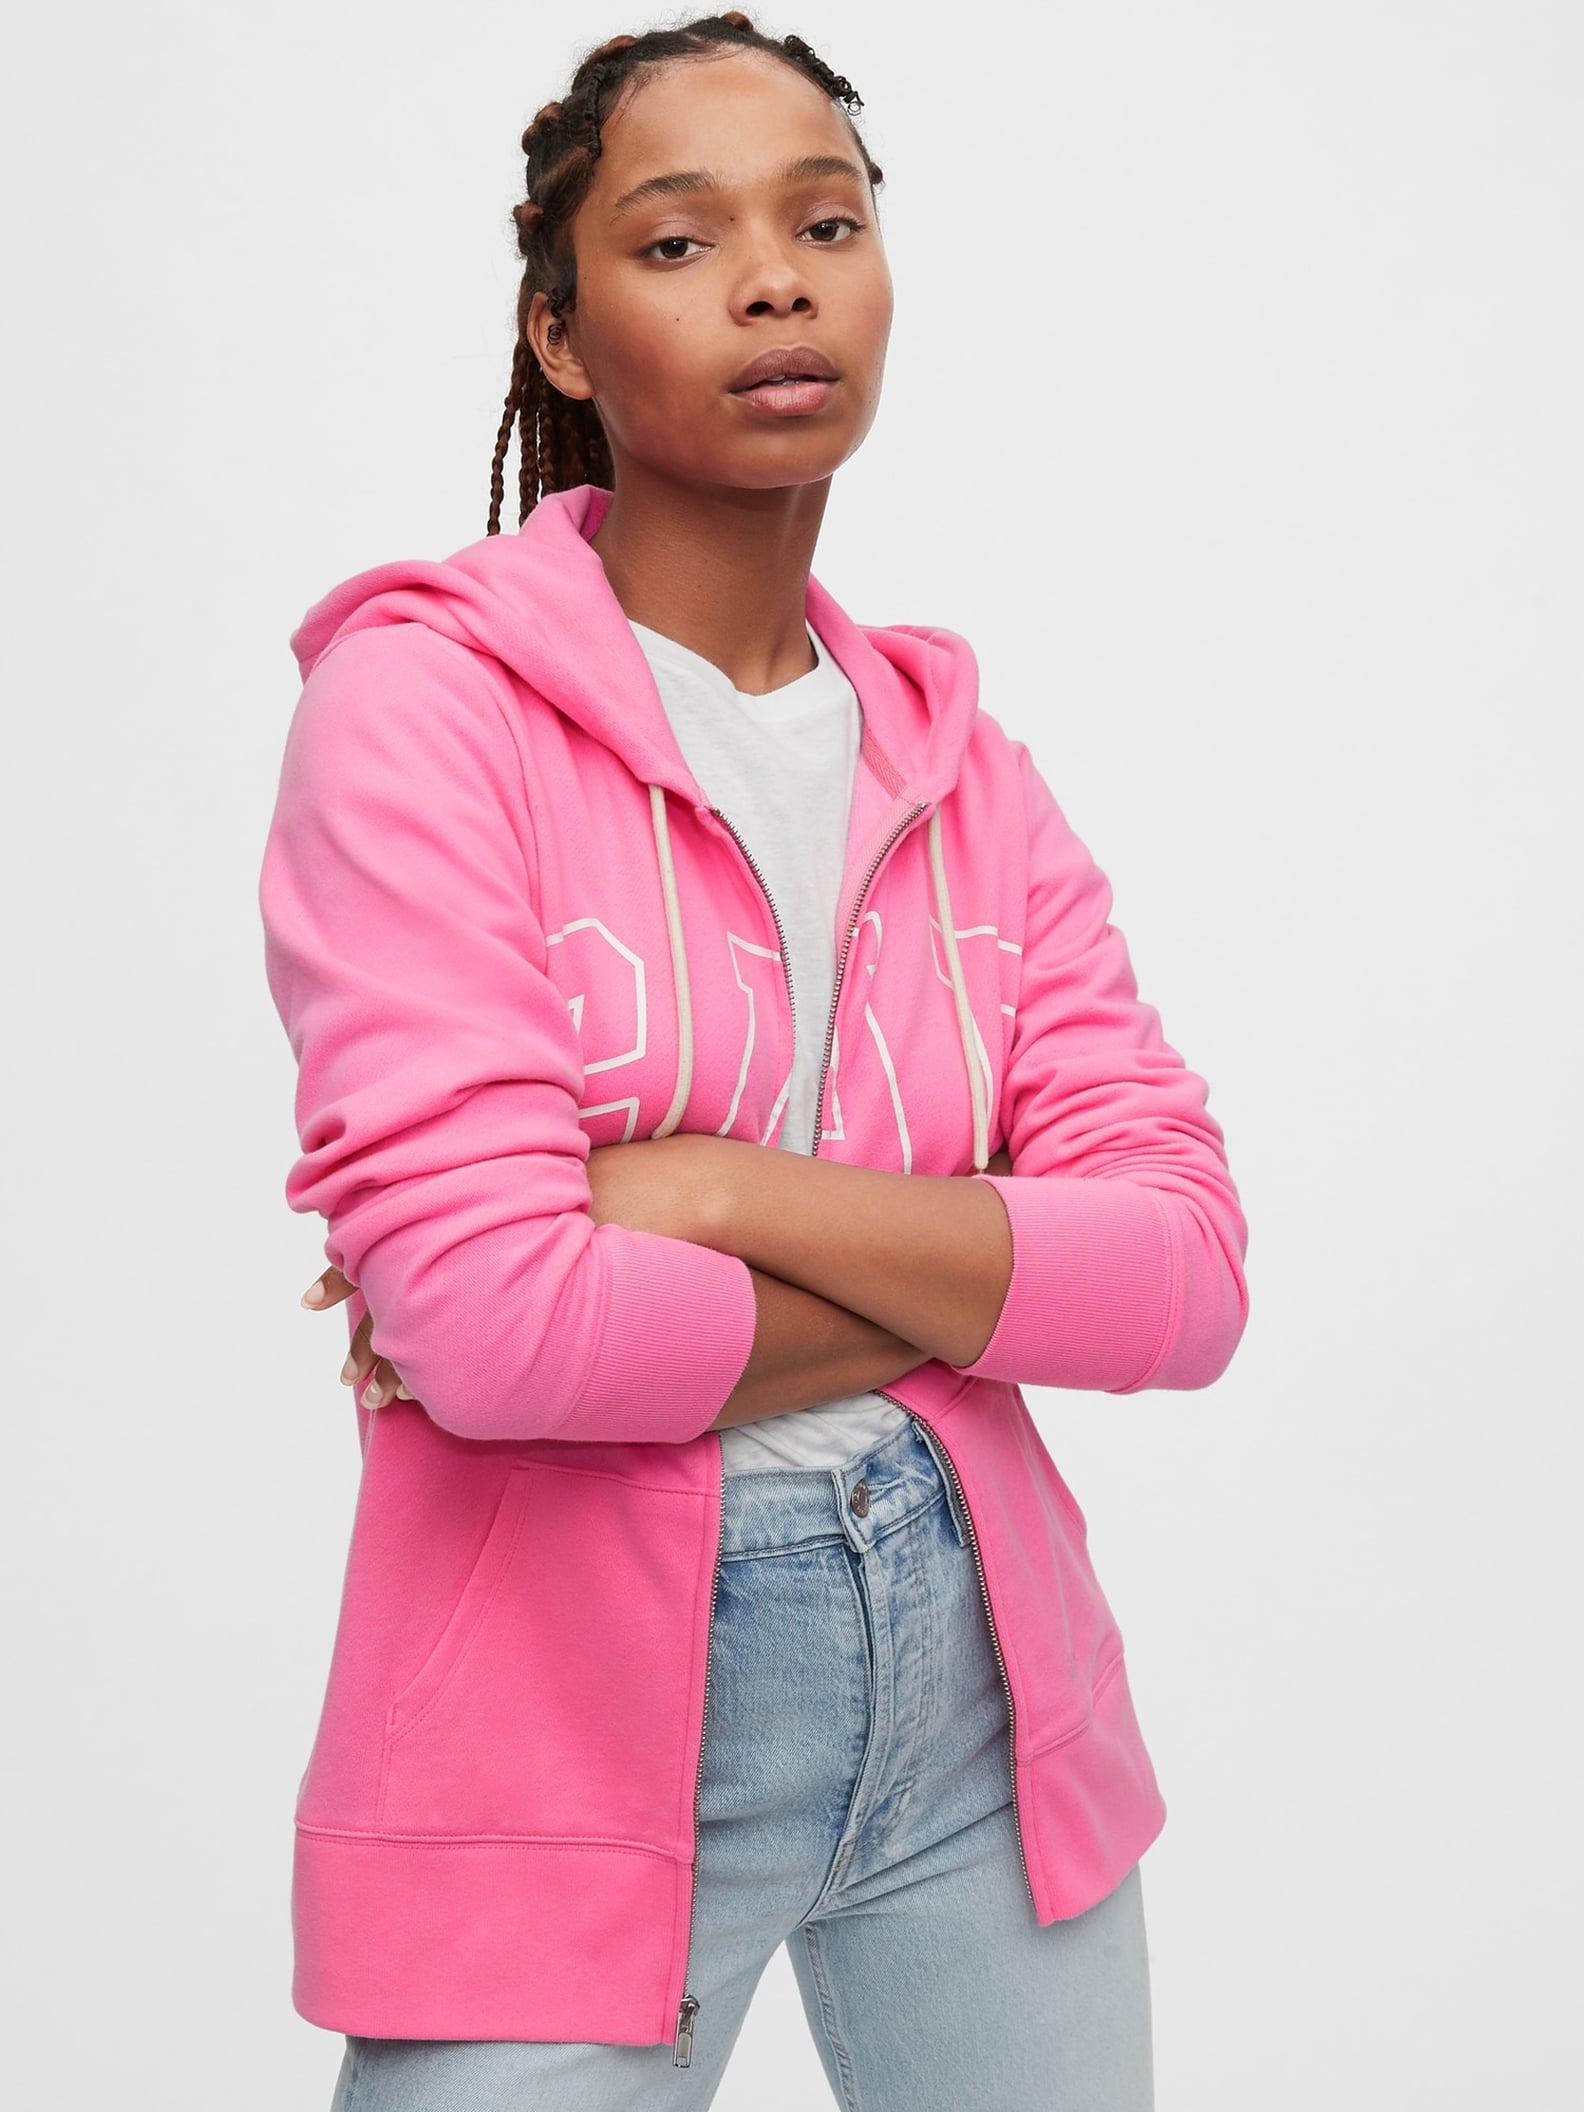 Katie Holmes Gap Sweatshirt | POPSUGAR Fashion